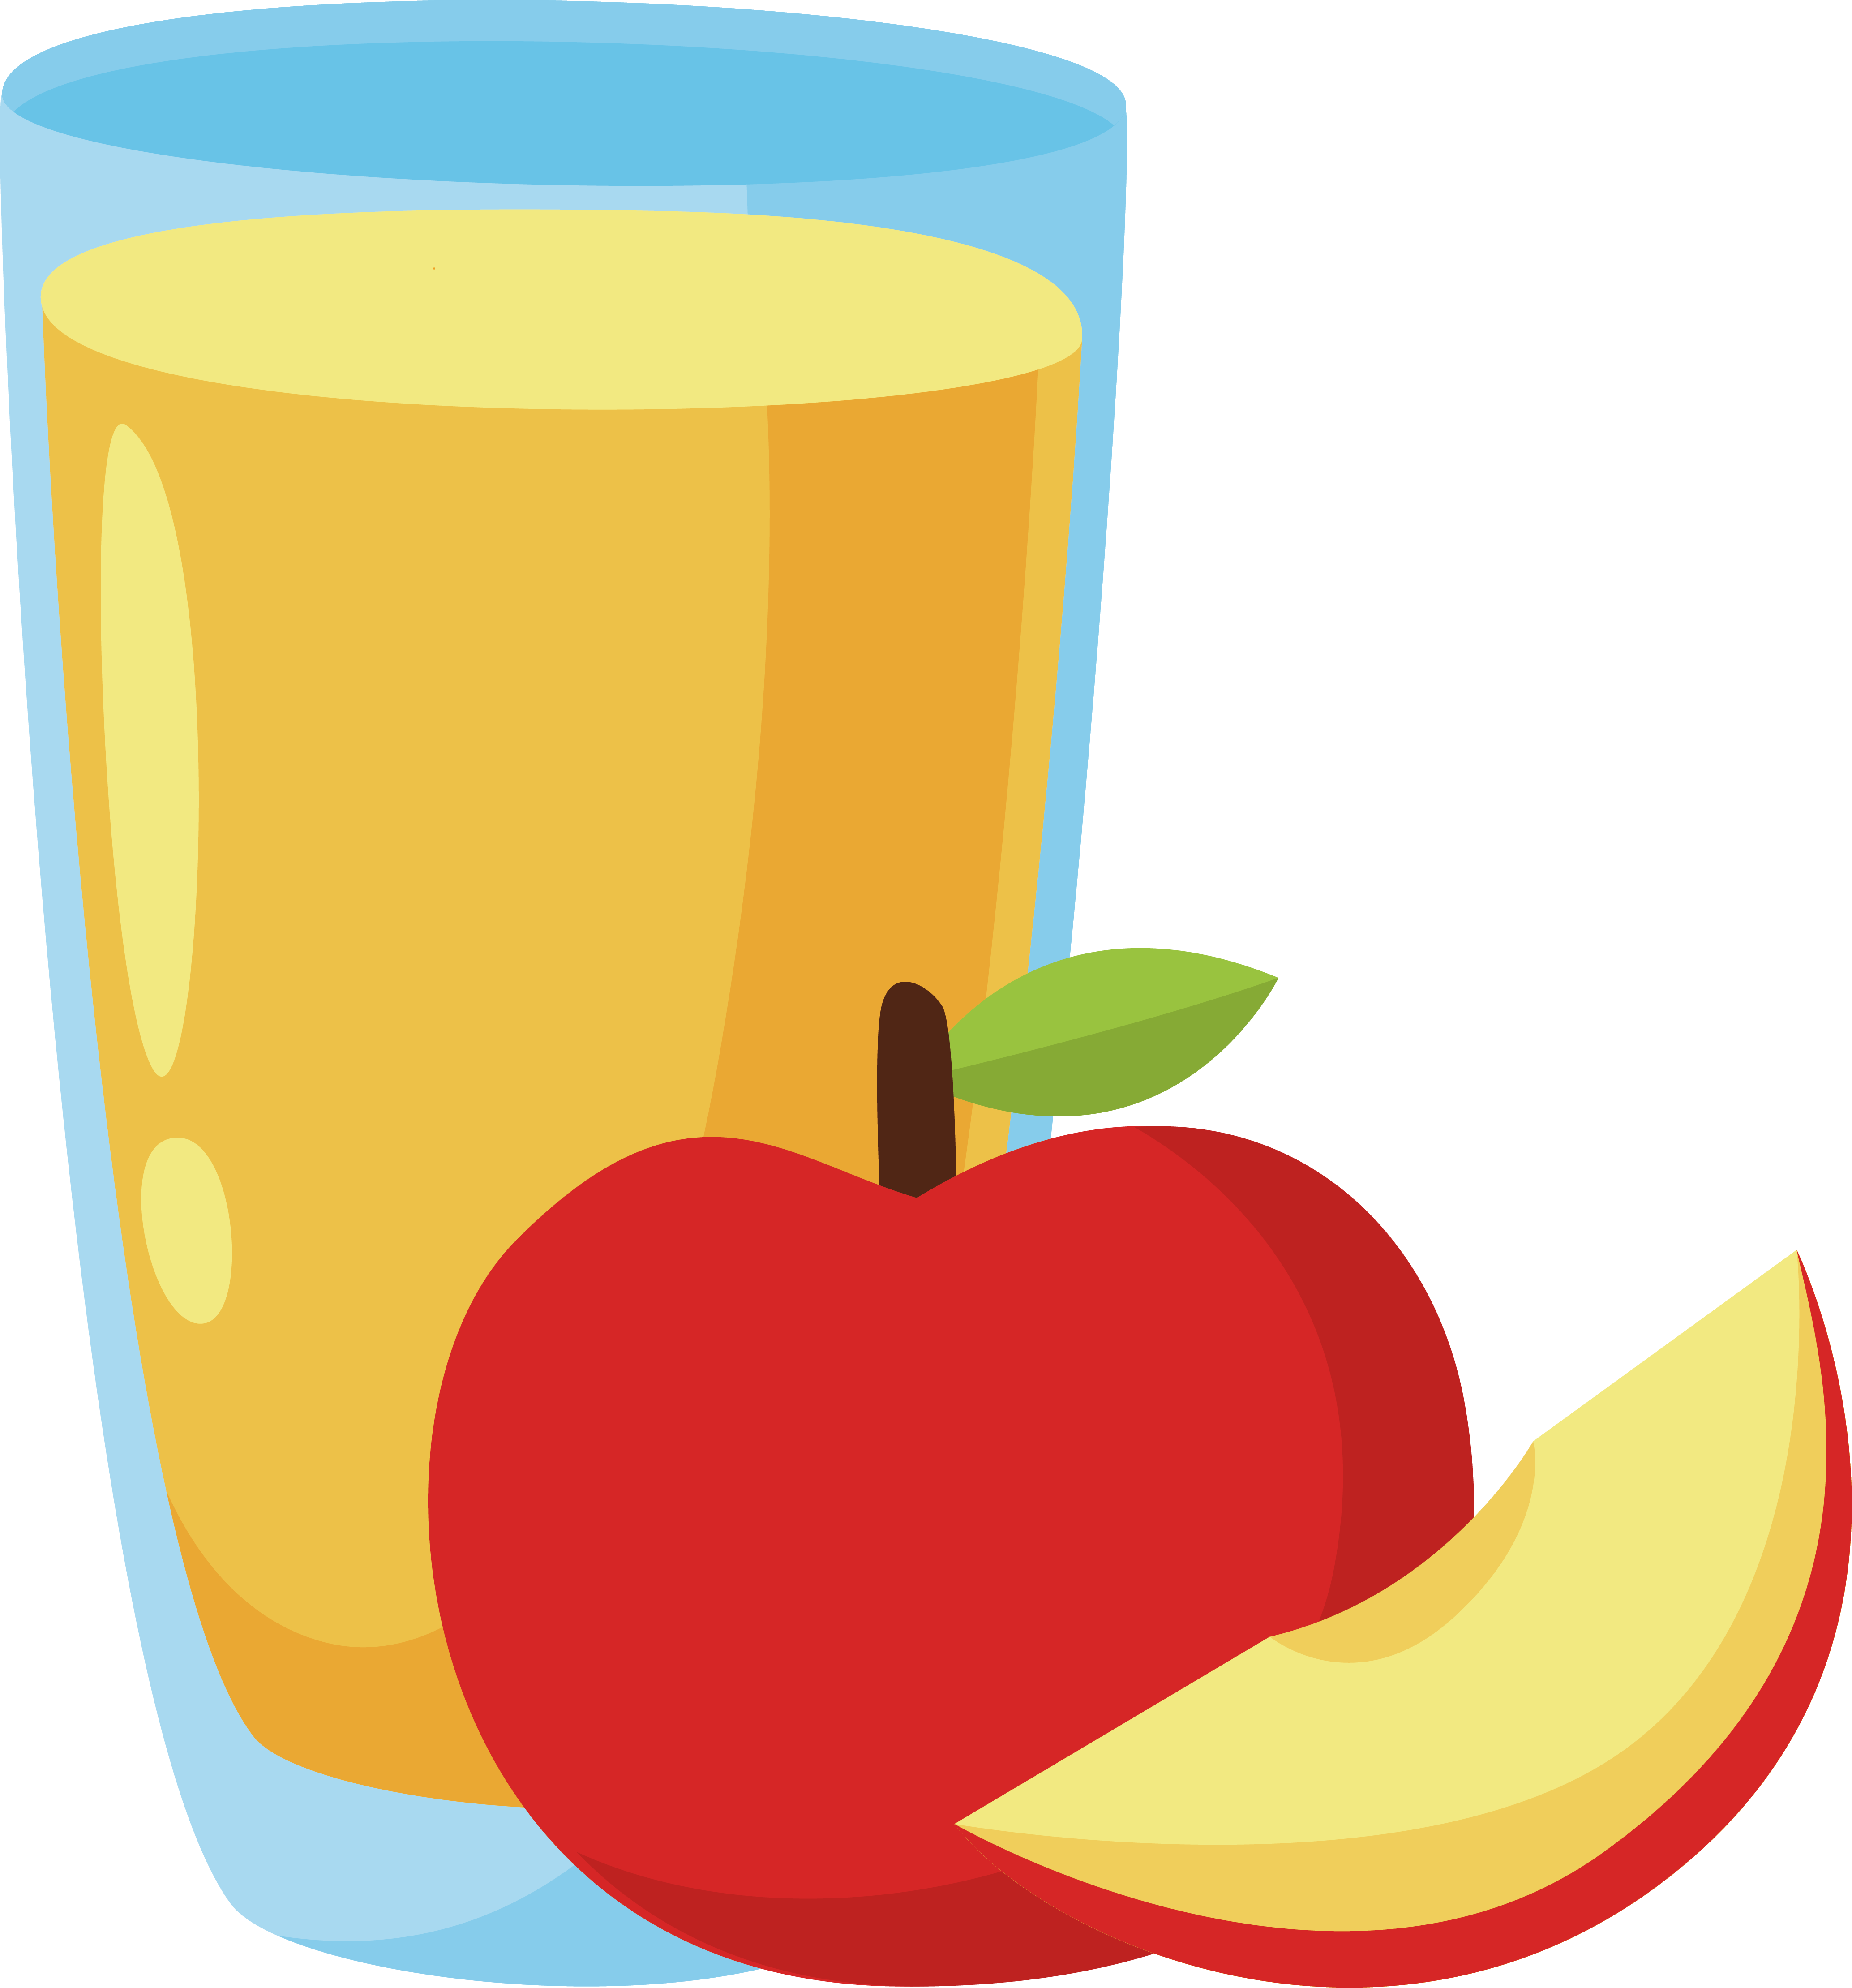 Clip art,Fruit,Food,Juice,Apple,Drink,Non